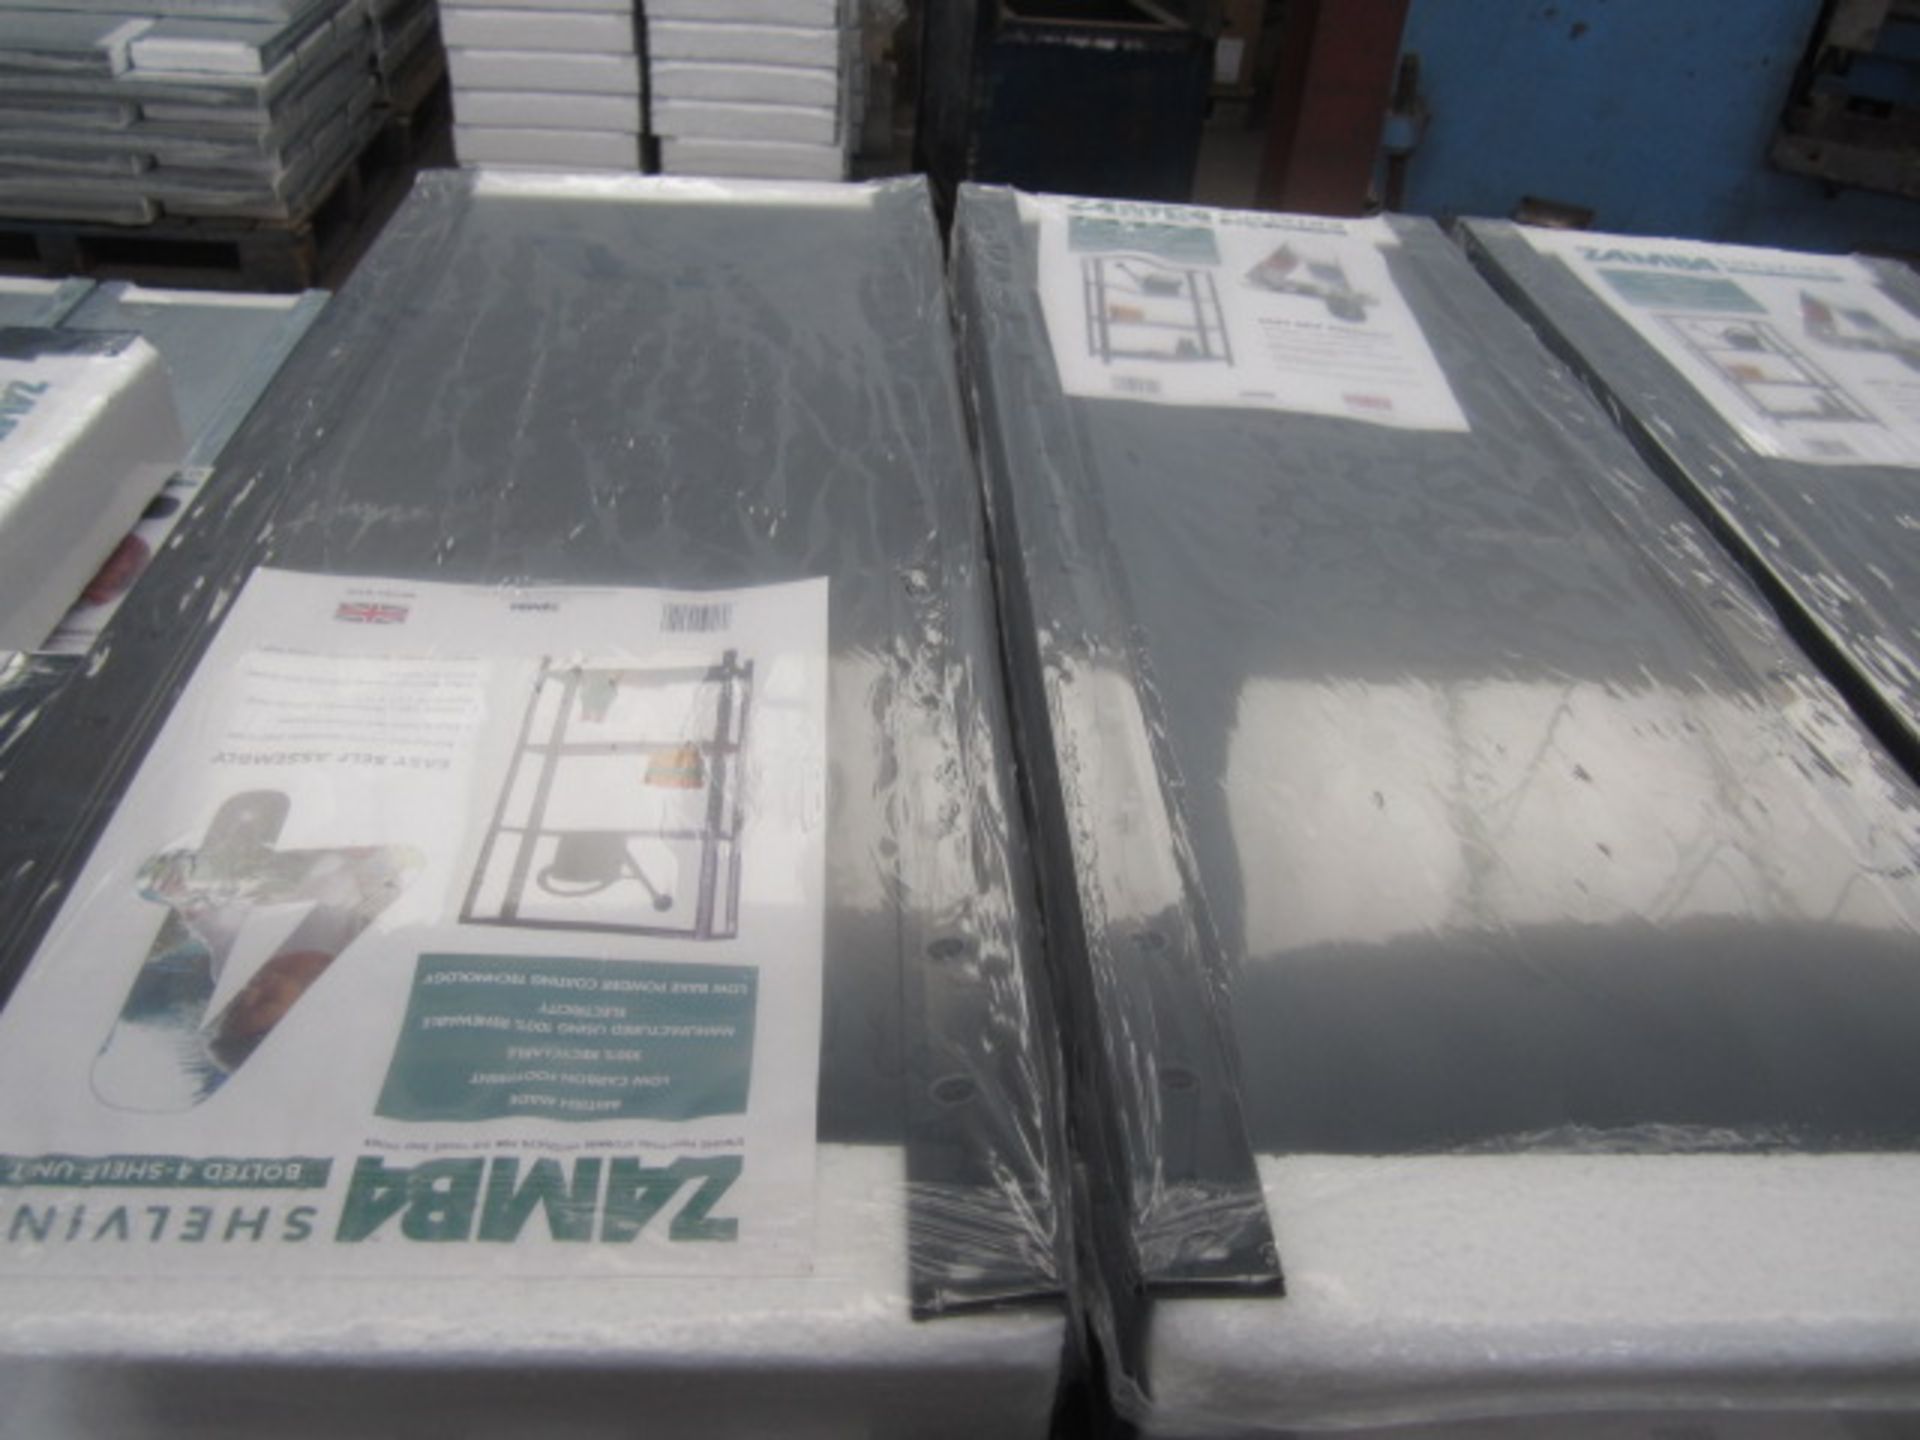 8 x packs Zamba bolted 4 shelf unit, width: 700mm x depth: 300mm x height: 1500mm